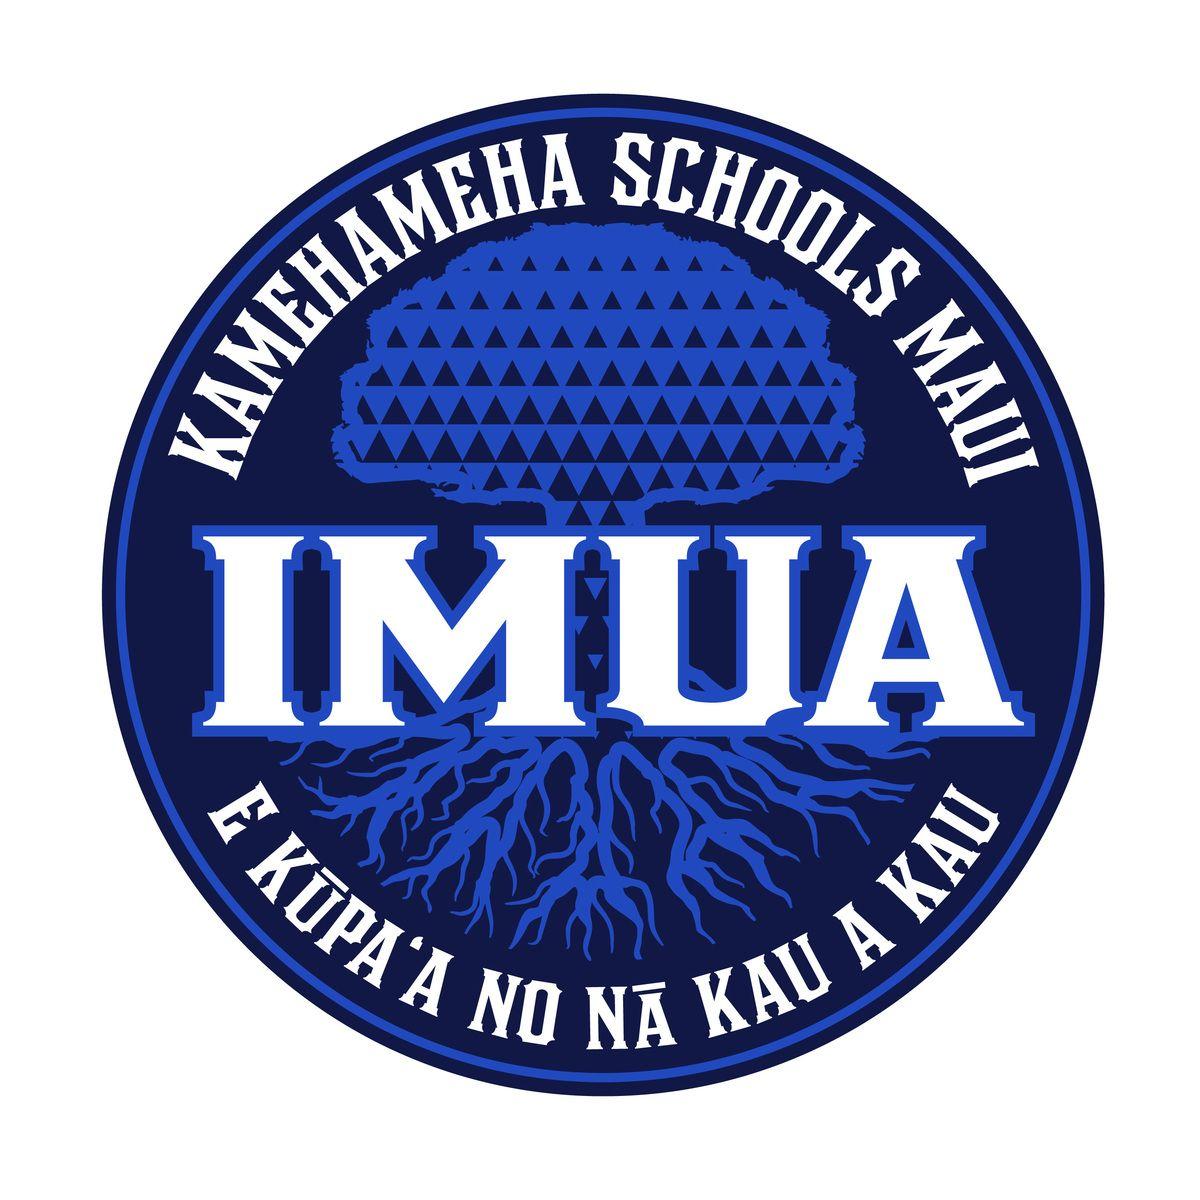 Kamehameha Logo - Group Page: Kamehameha Schools Maui Ho'olaule'a 2018 | SignUp ...